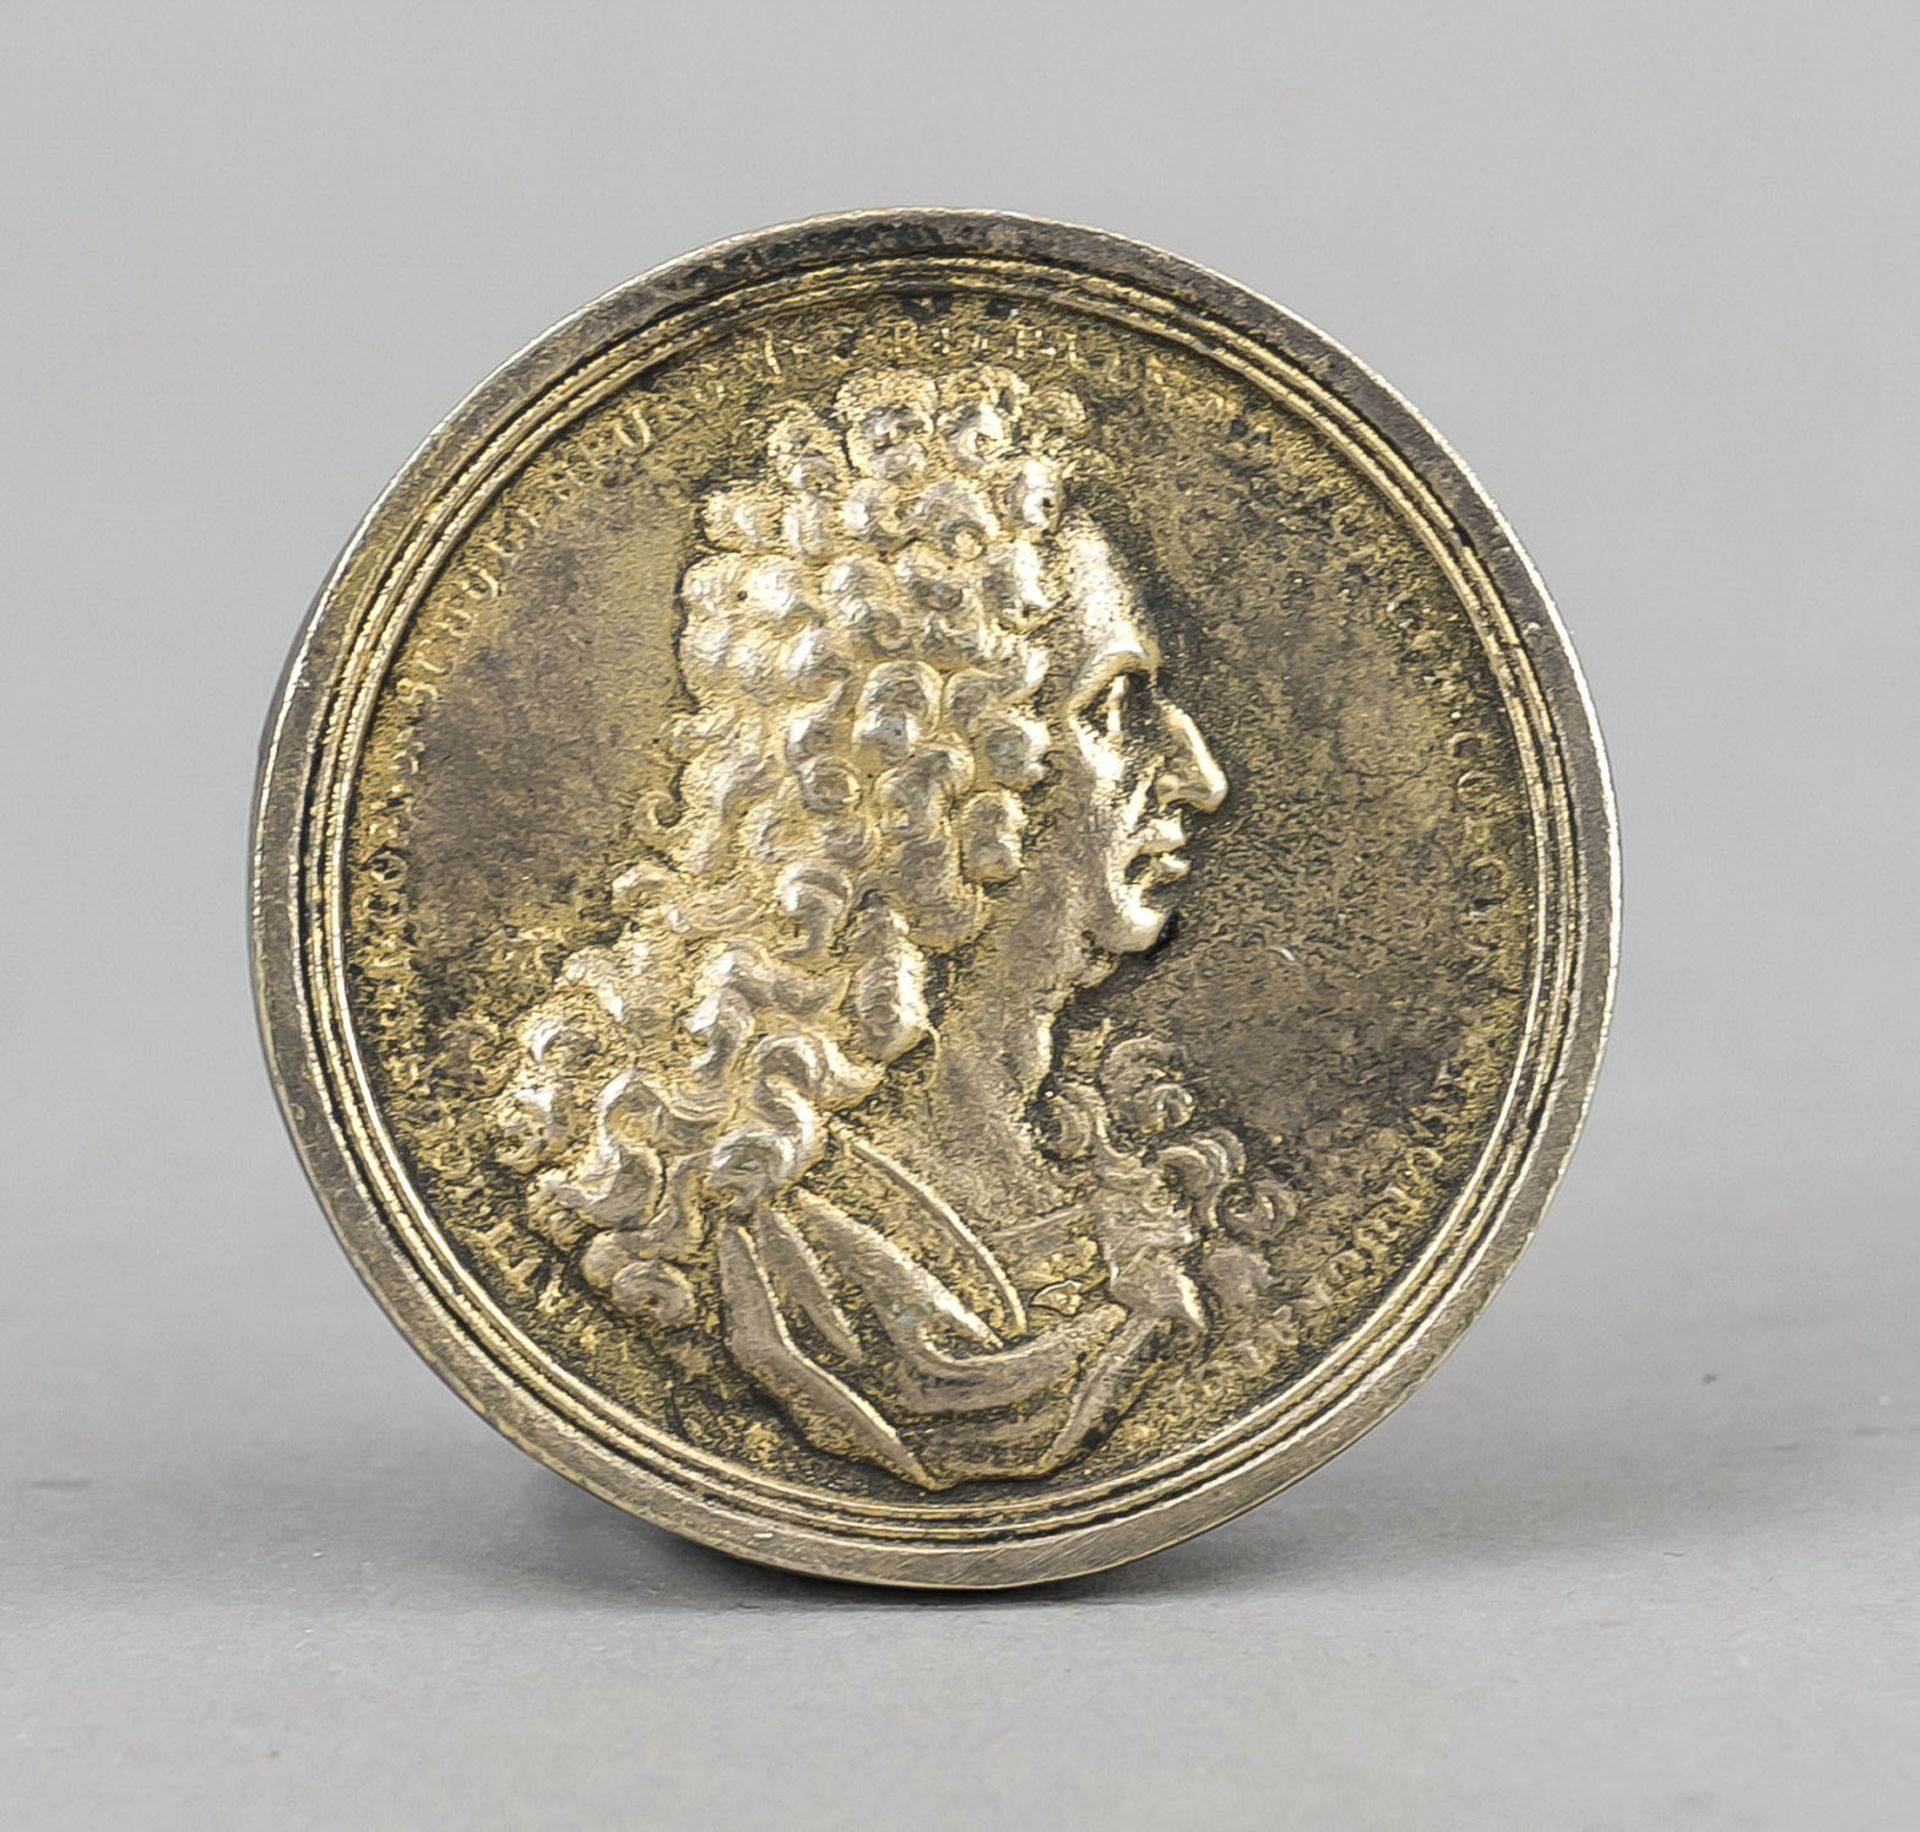 Medal with portrait of a ruler, probably Johann Reichsgraf zu Schulenburg, 18th century, bronze. - Image 2 of 2